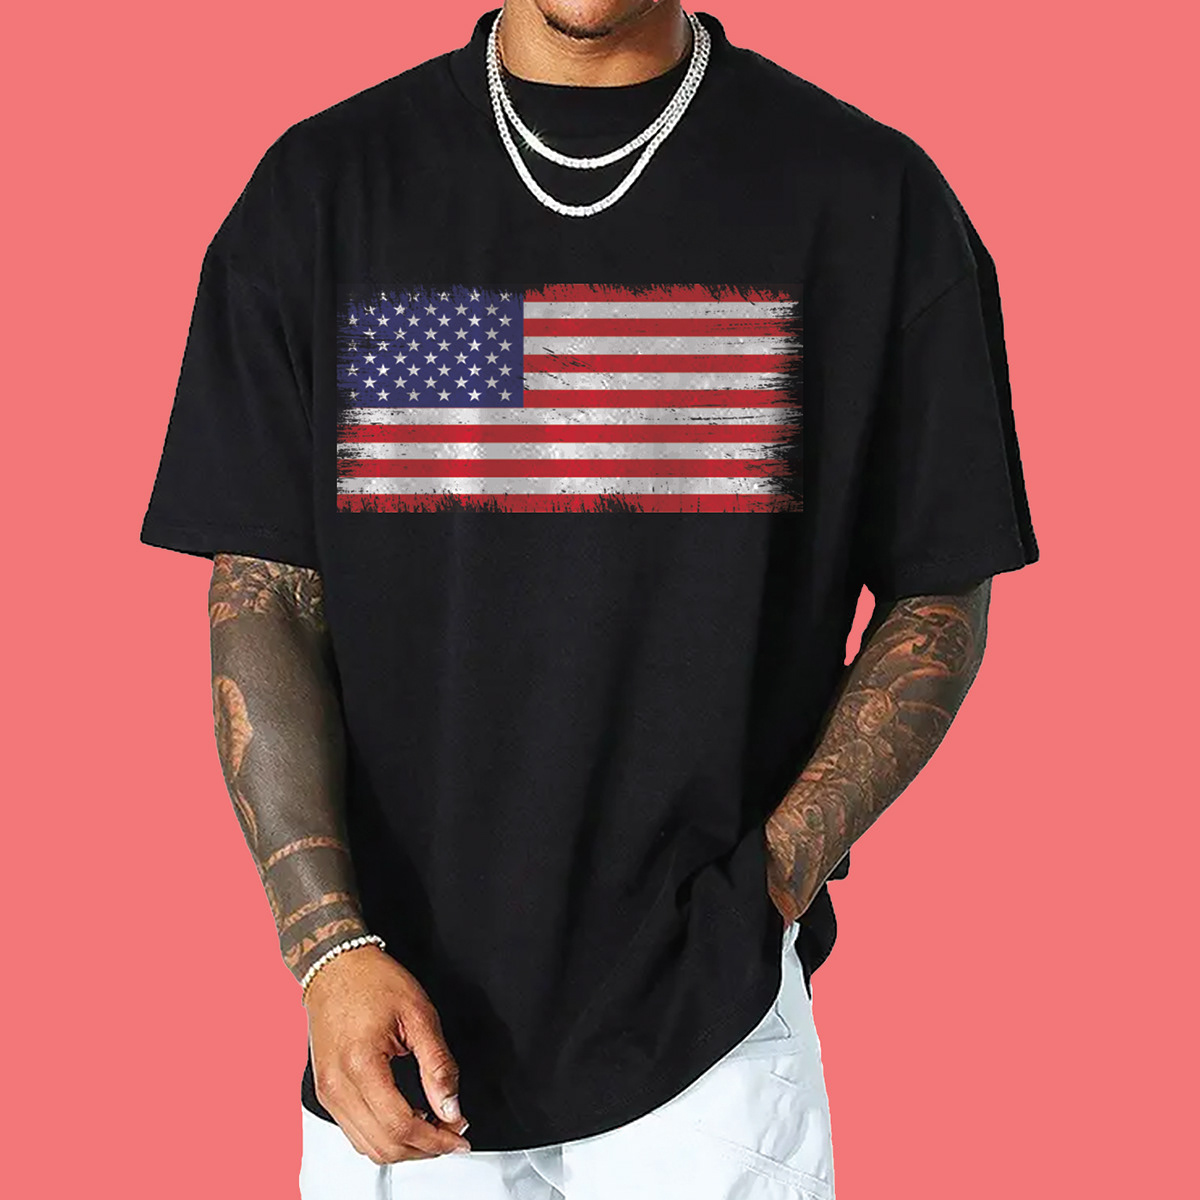 free t shirt mockup on Behance